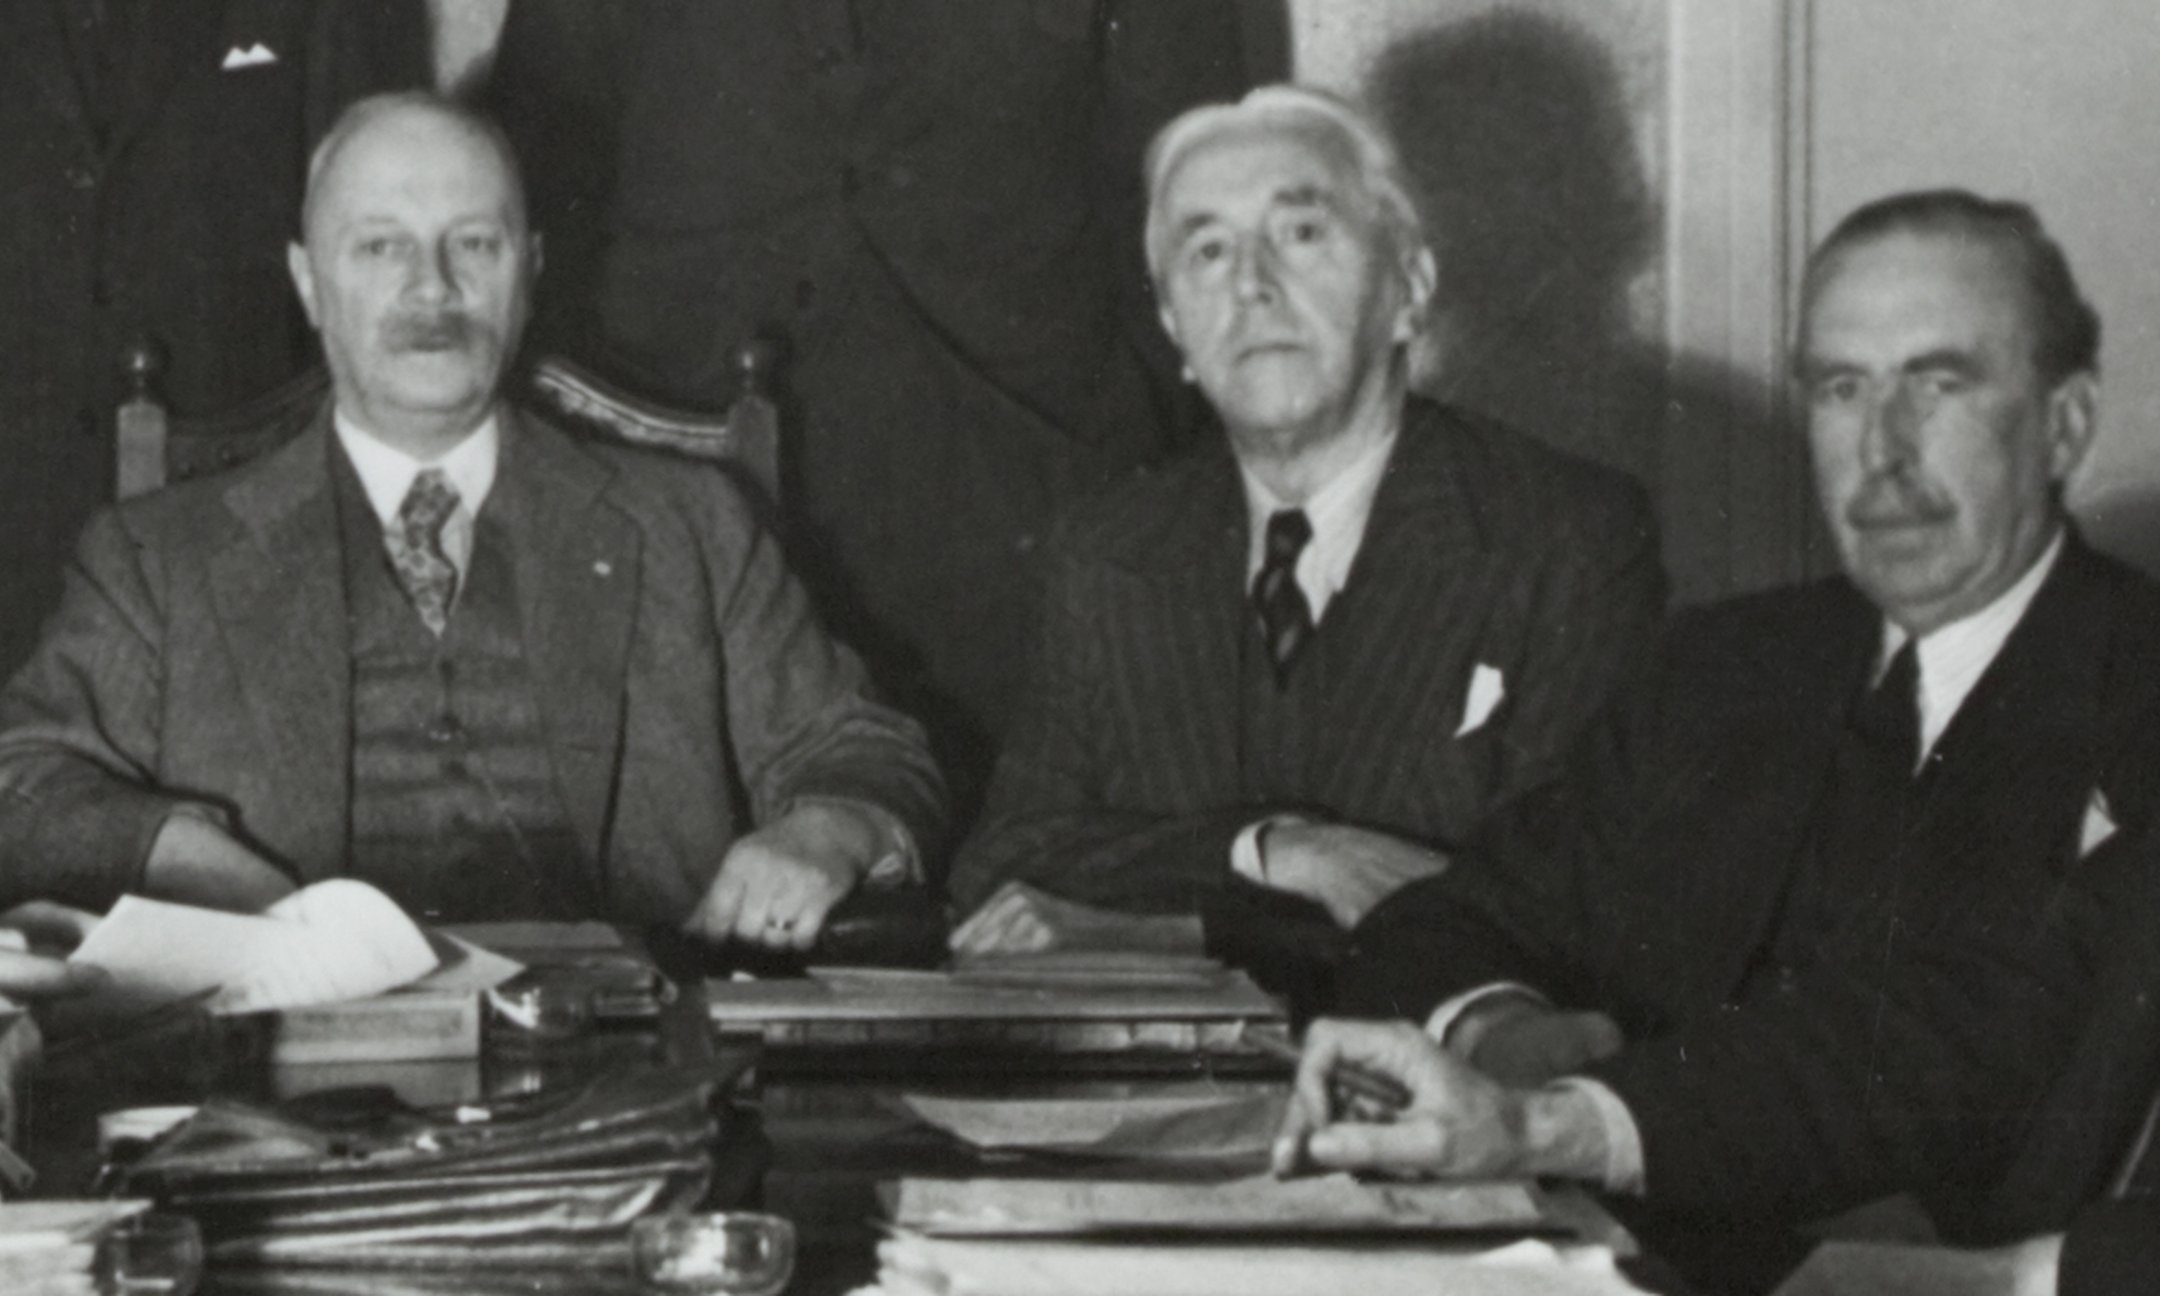 Minister G. Bolkestein tussen Minister-President P. Gerbrandy (l) en Minister E. Michiels van Verduynen (r) tijdens een ministerraadsvergadering.
London, Verenigd Koninkrijk, 1944.